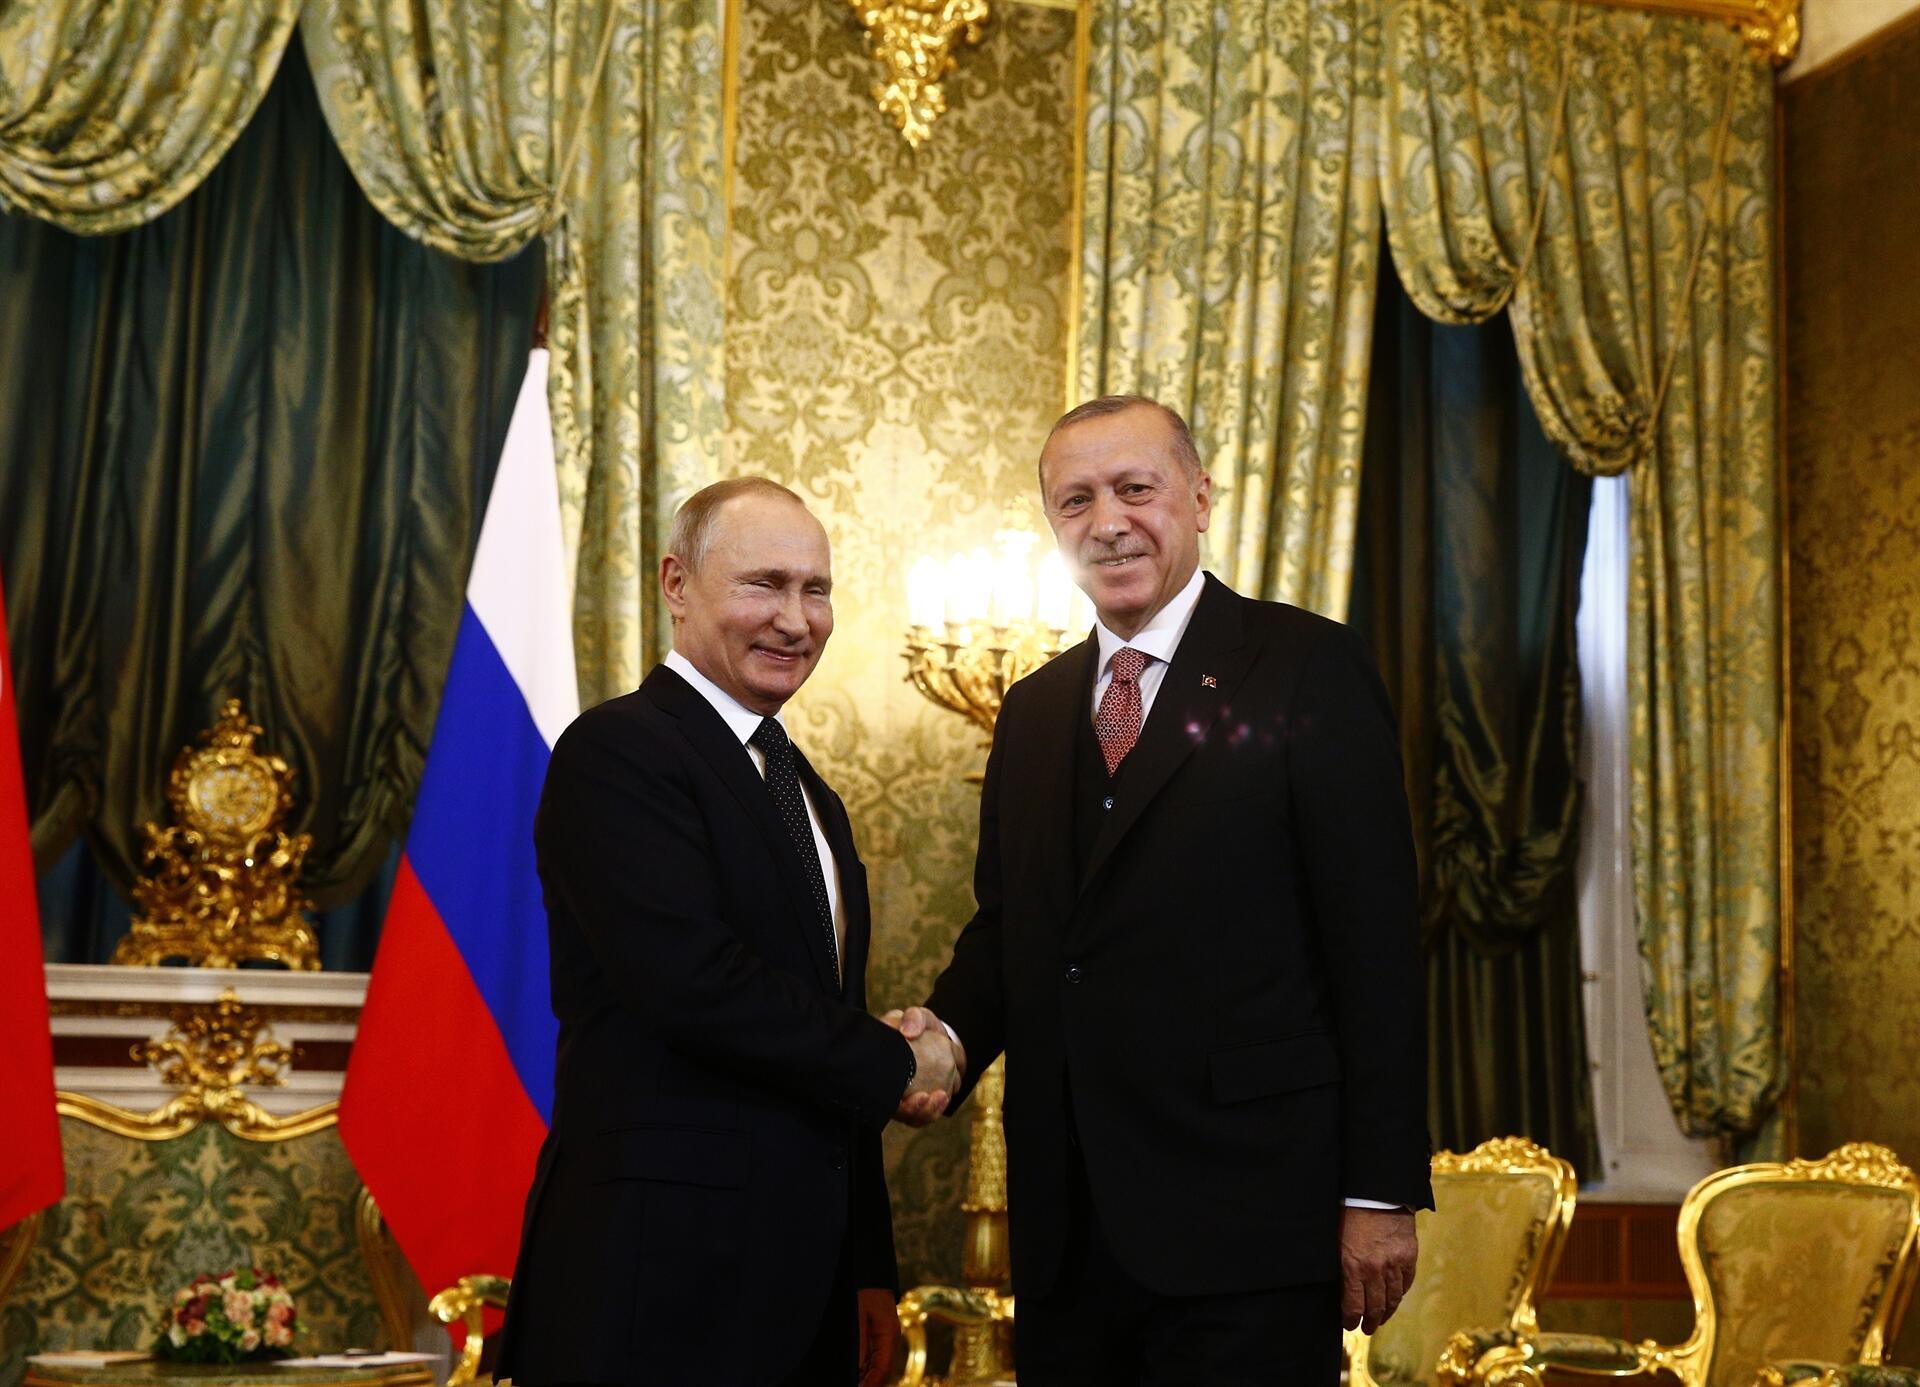 Erdoğan, Putin talk ‘close cooperation in Syria’ over phone - Türkiye News